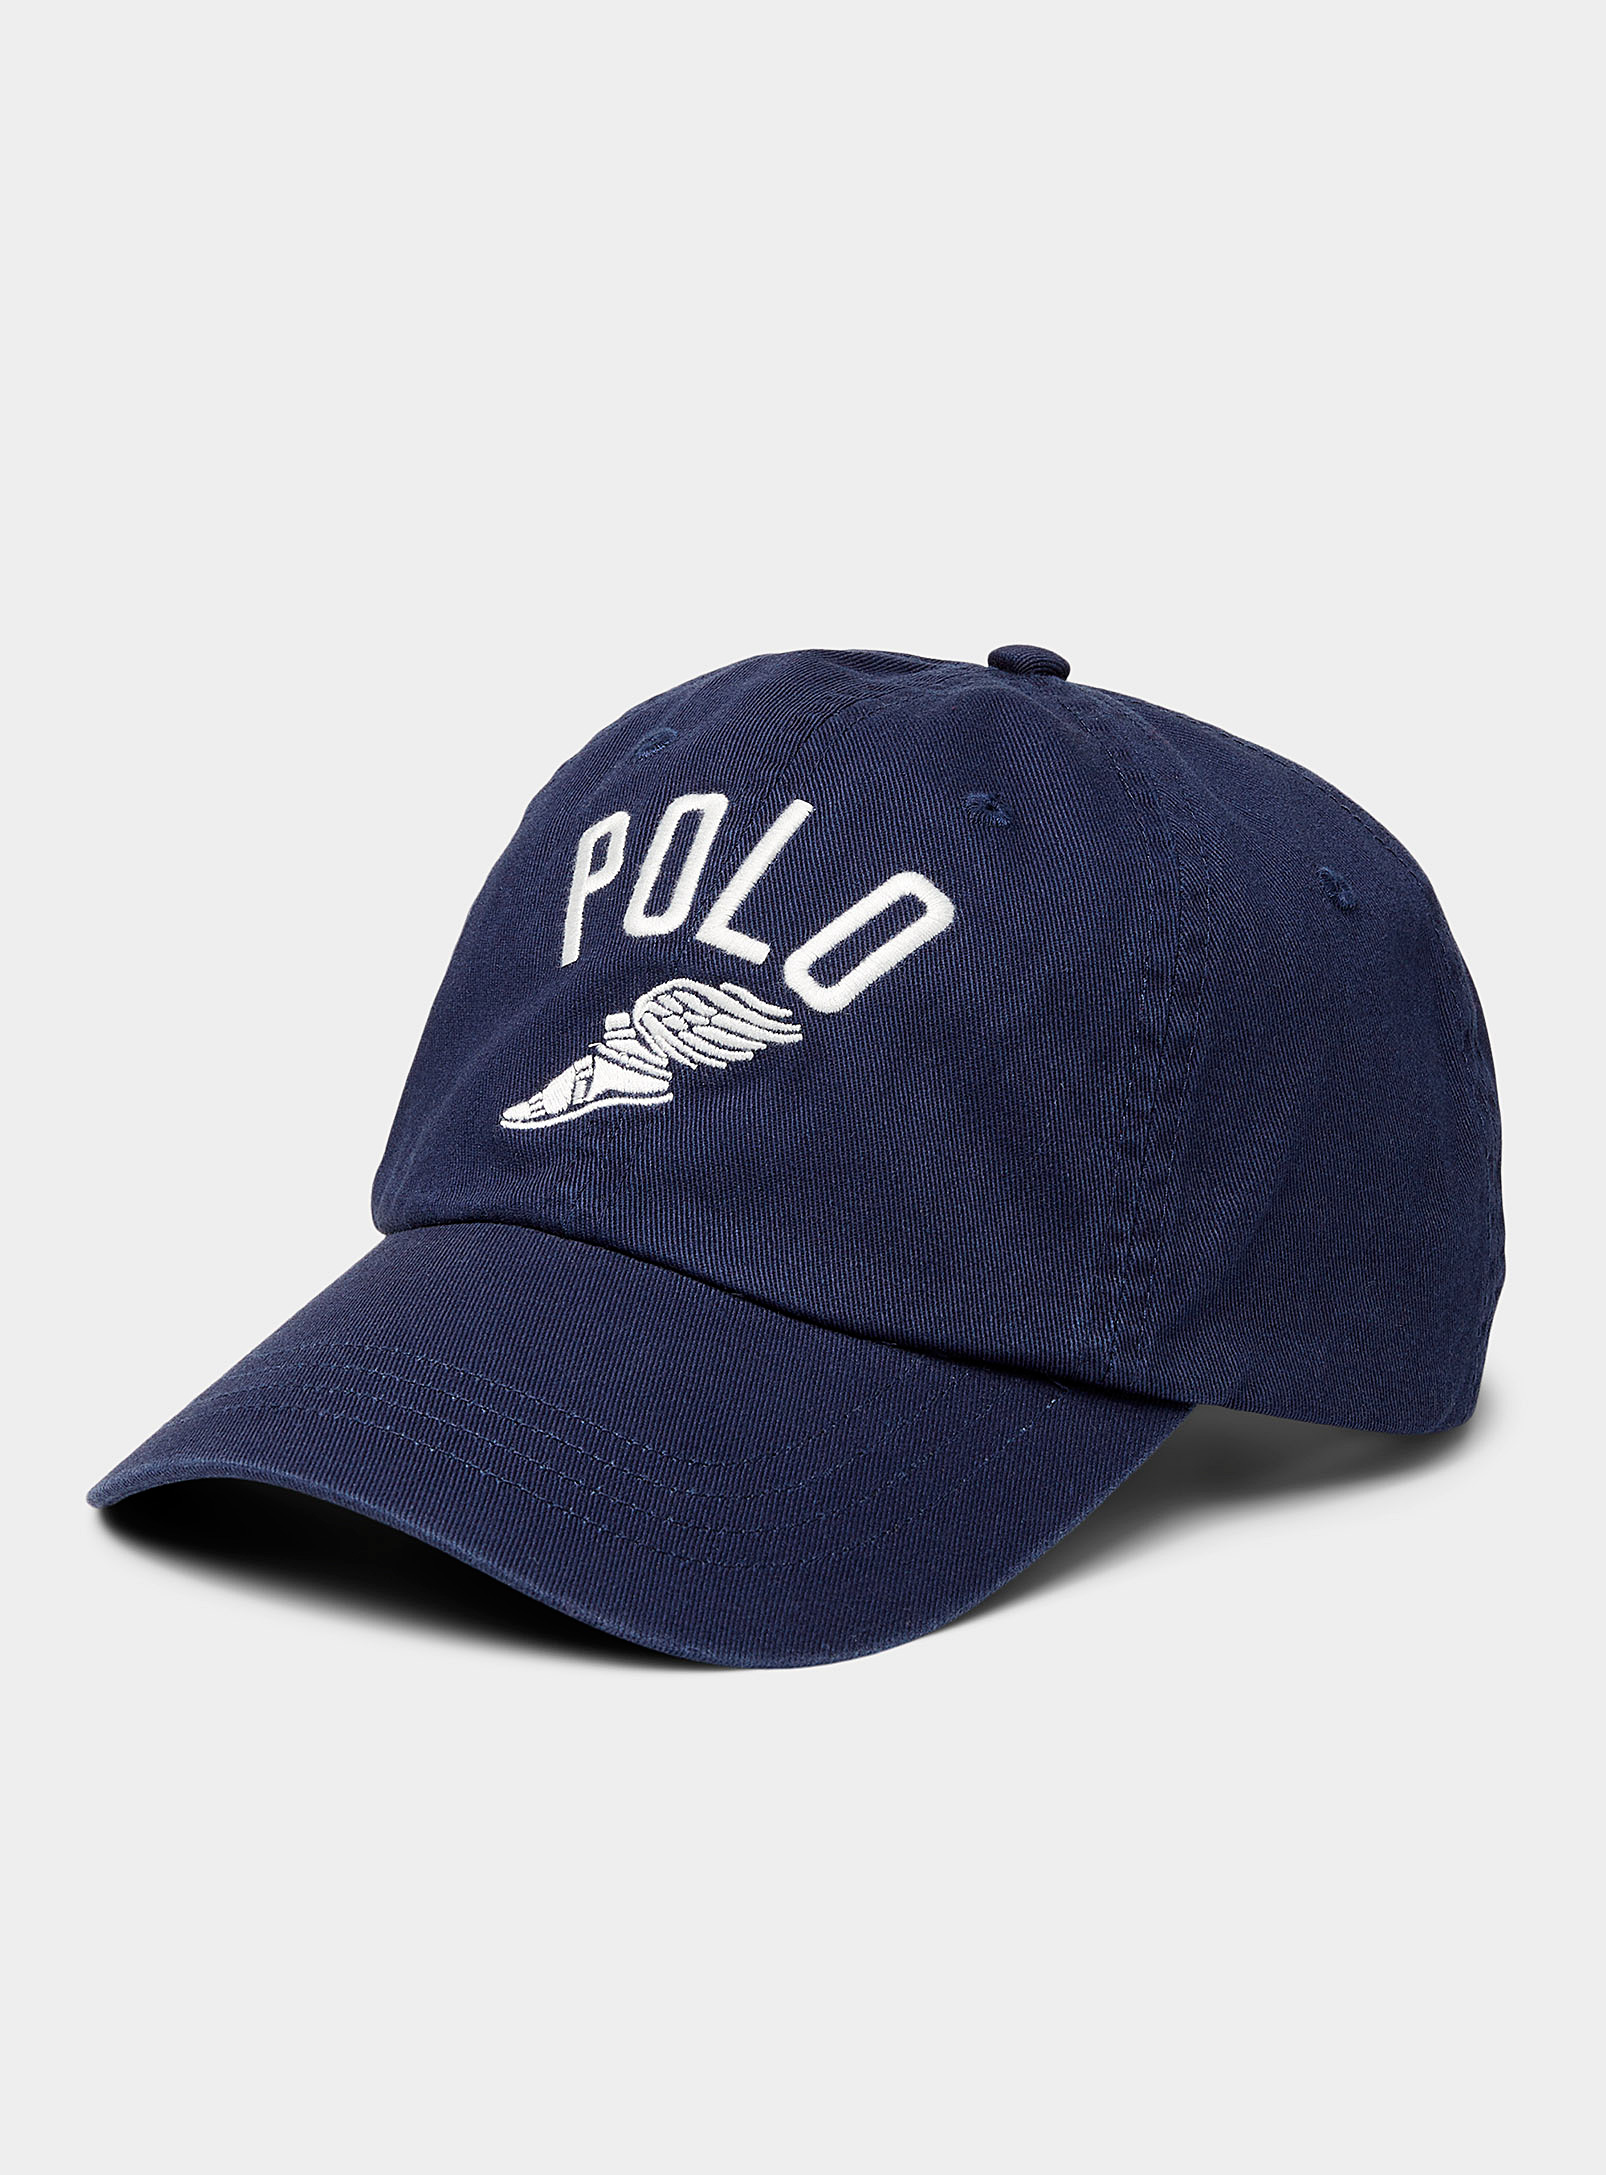 Polo Ralph Lauren - Men's Retro embroidery cap